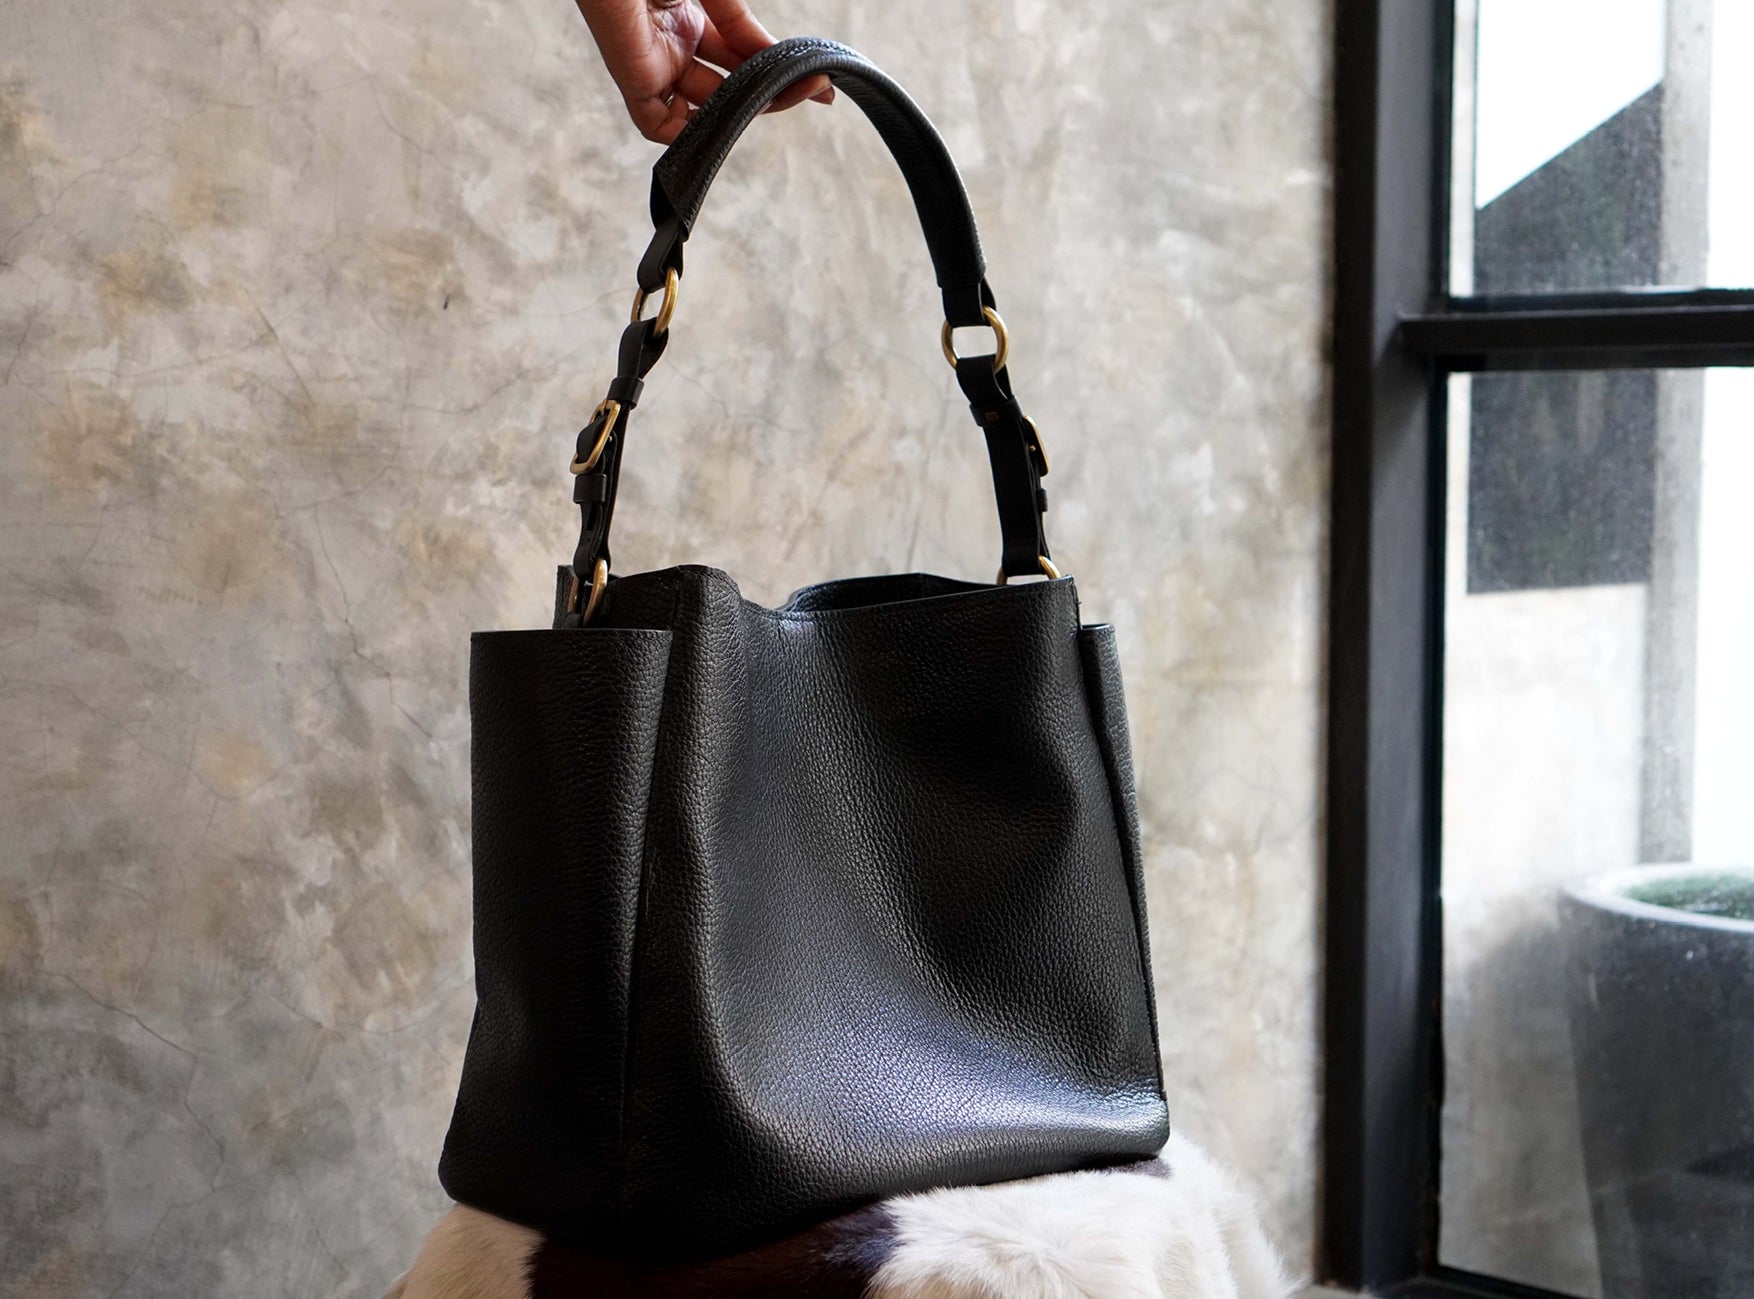 leather hobo bag pattern